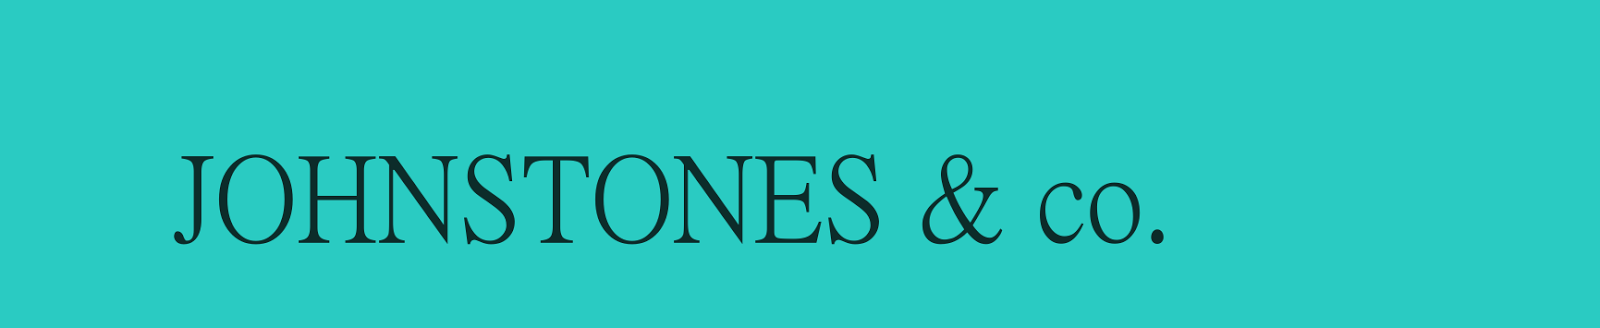 Johnstones & co.